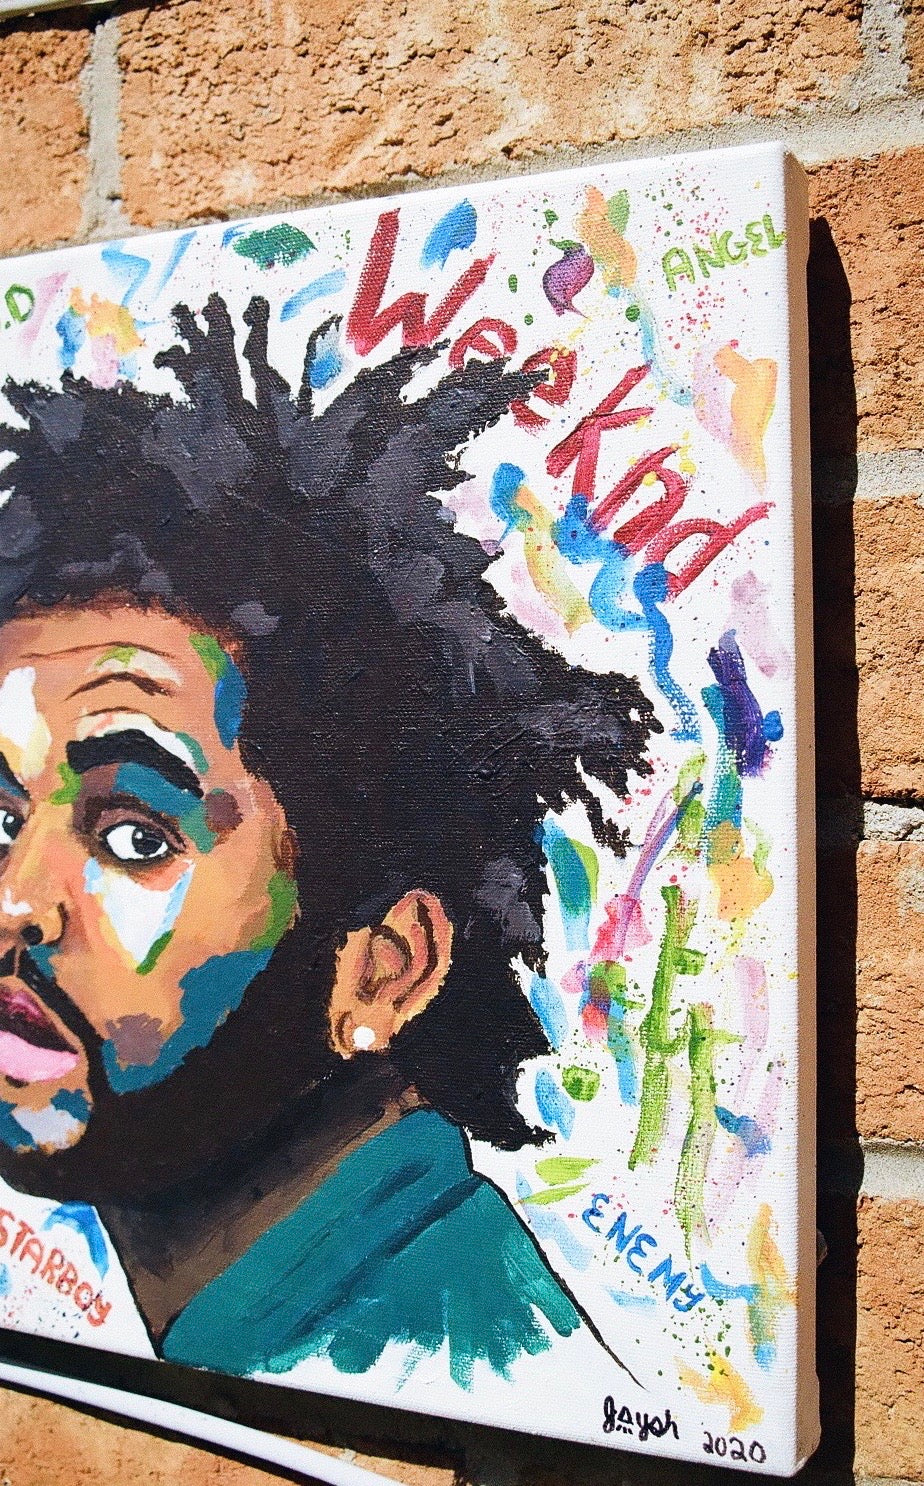 The Weeknd Portrait Art Print